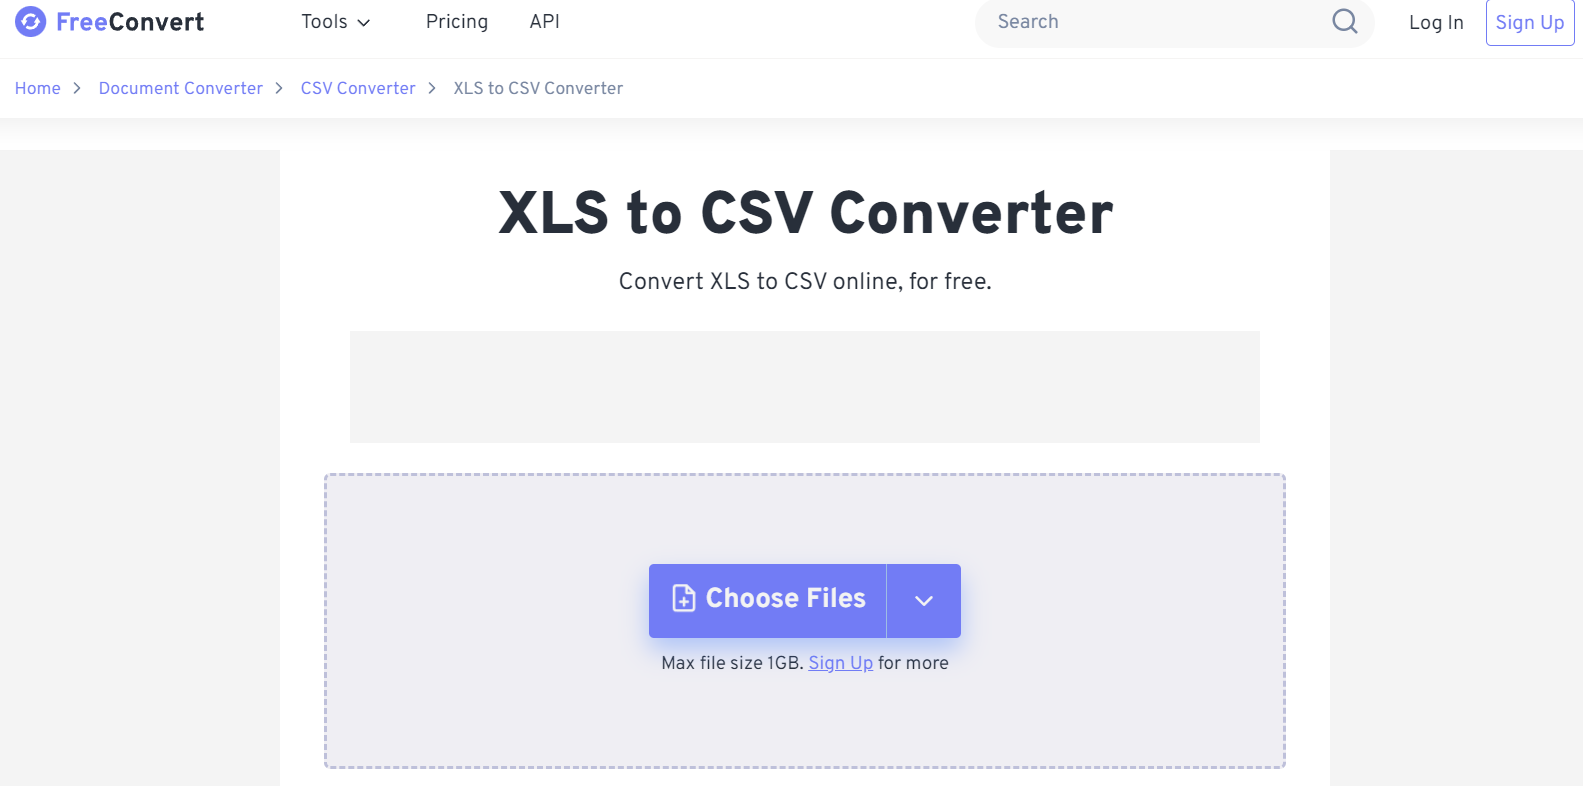 FreeConvert XLS to CSV Converter